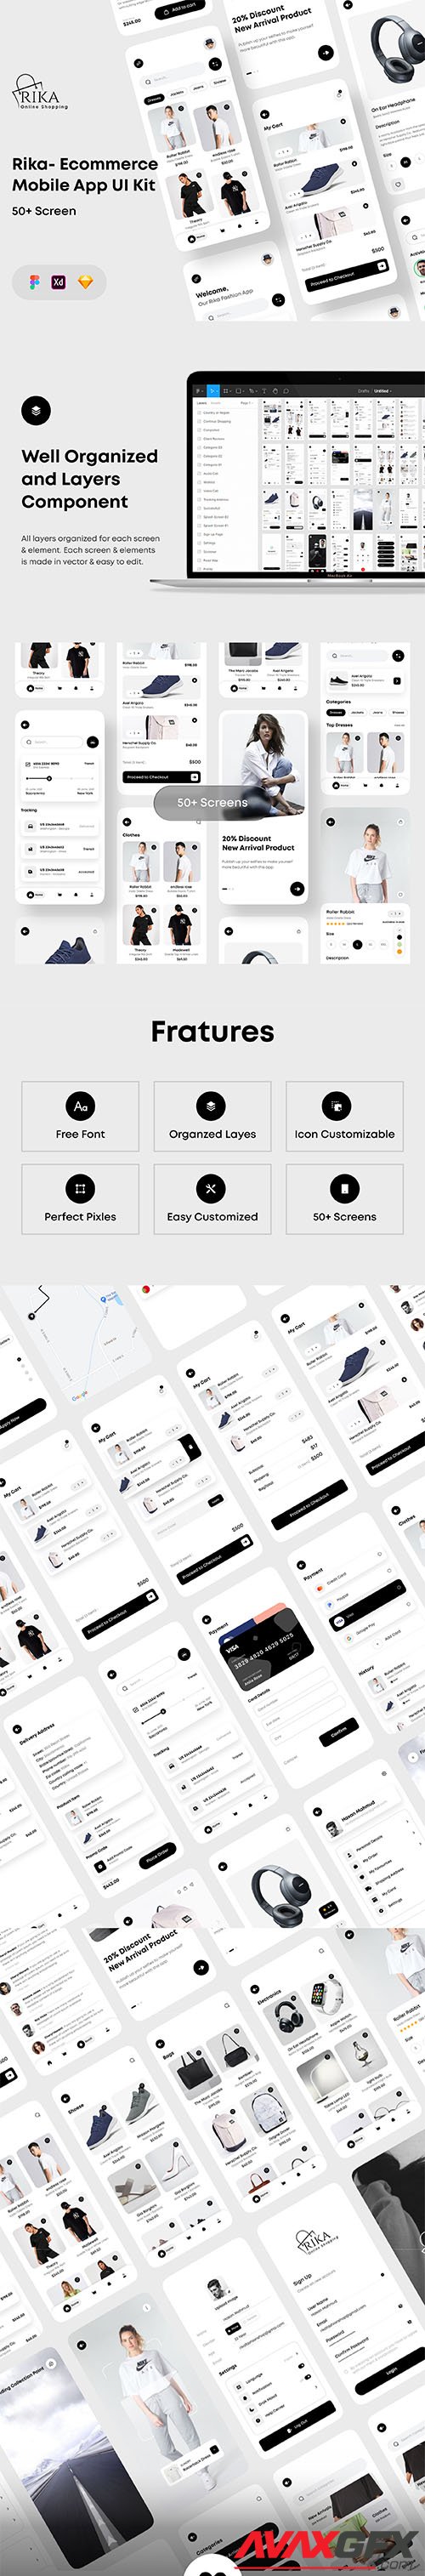 Rika - eCommerce Mobile App UI Kit